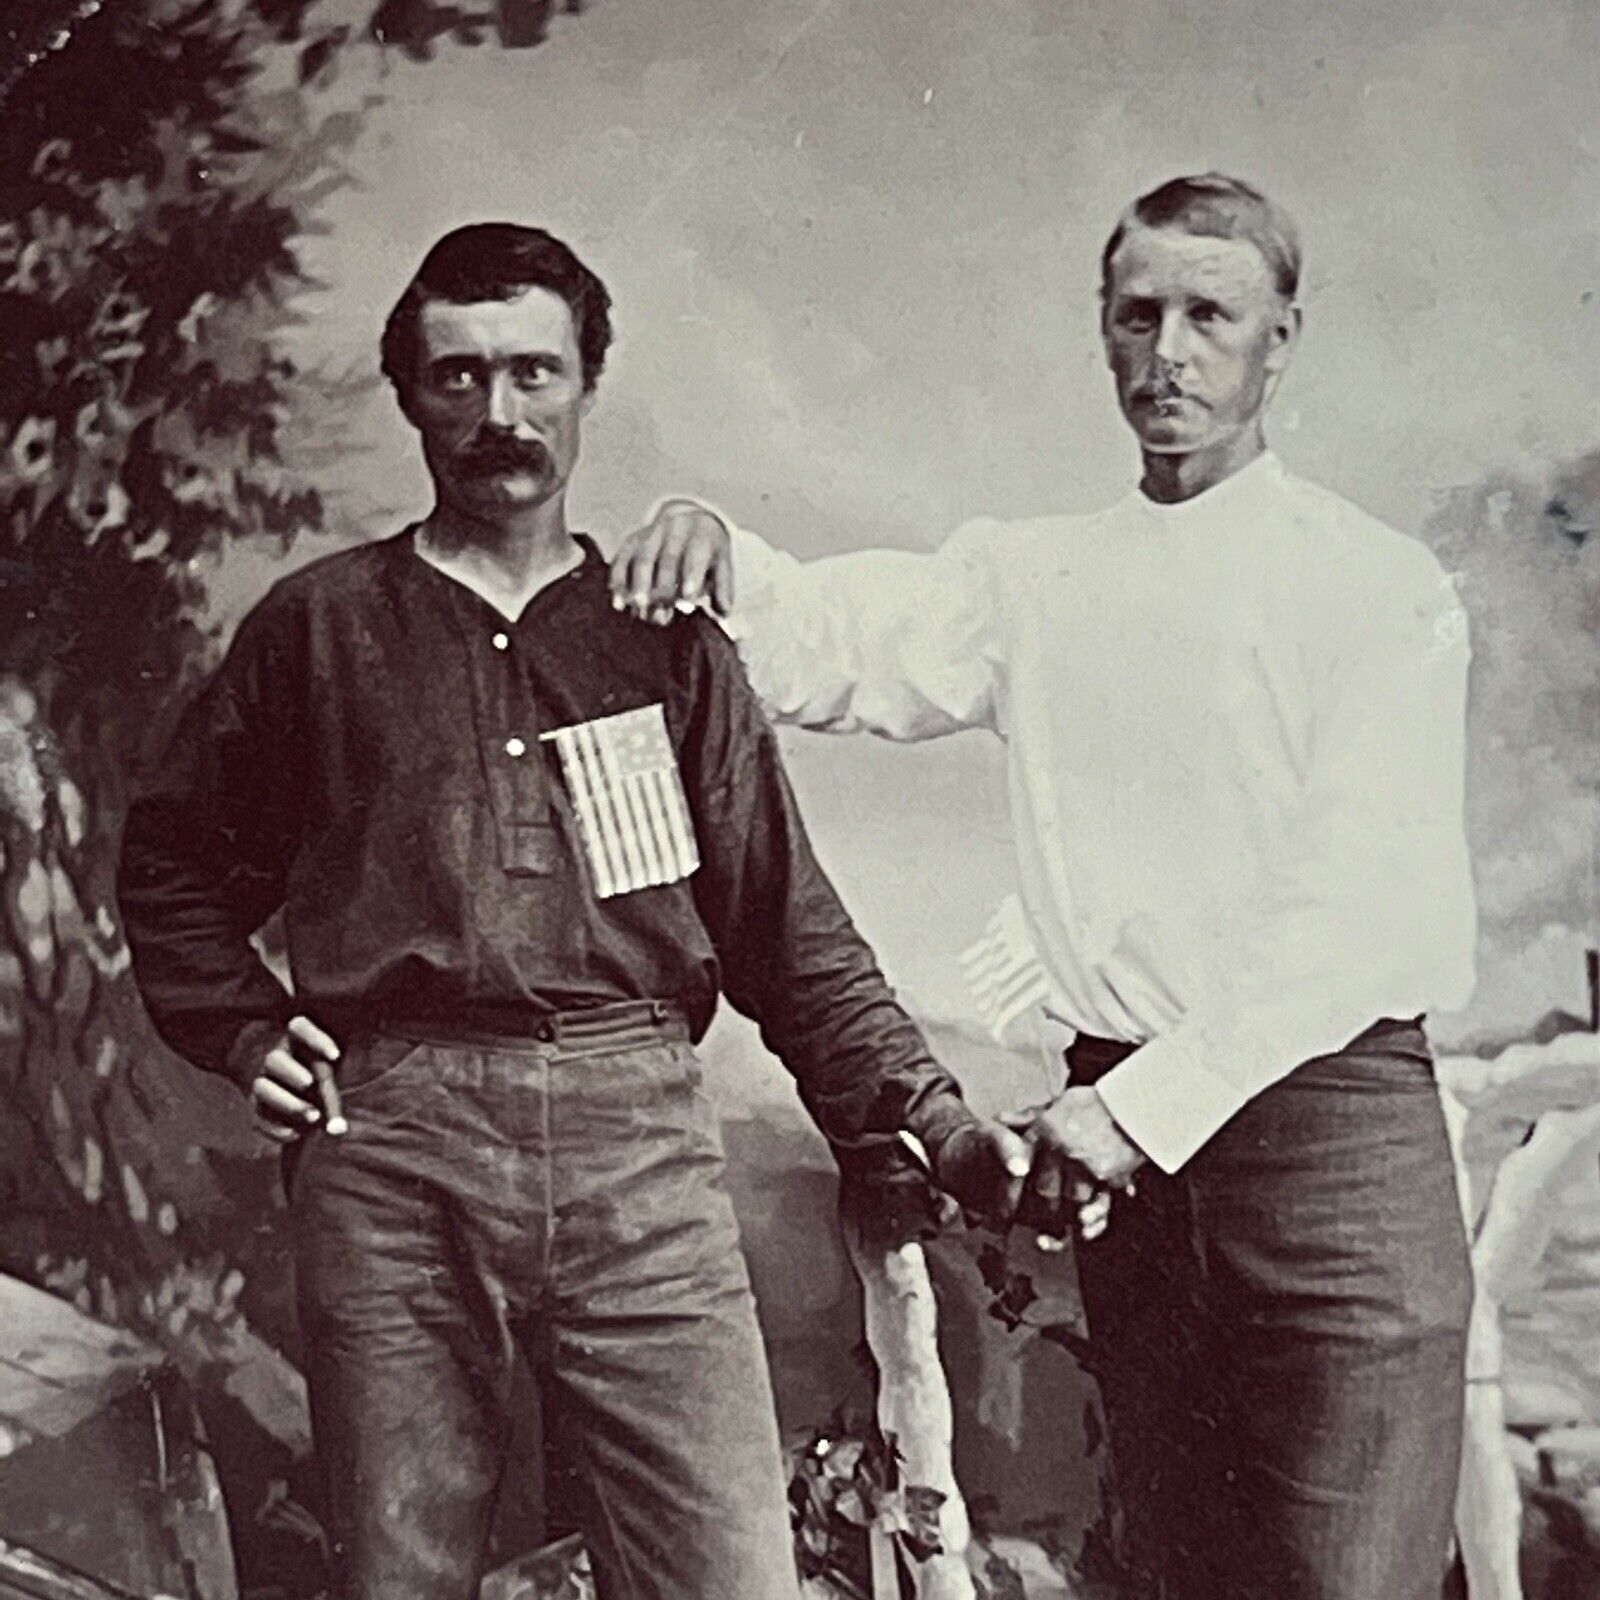 Antique Tintype Photograph Rugged Men Holding Hands UCV Flag Post Civil War